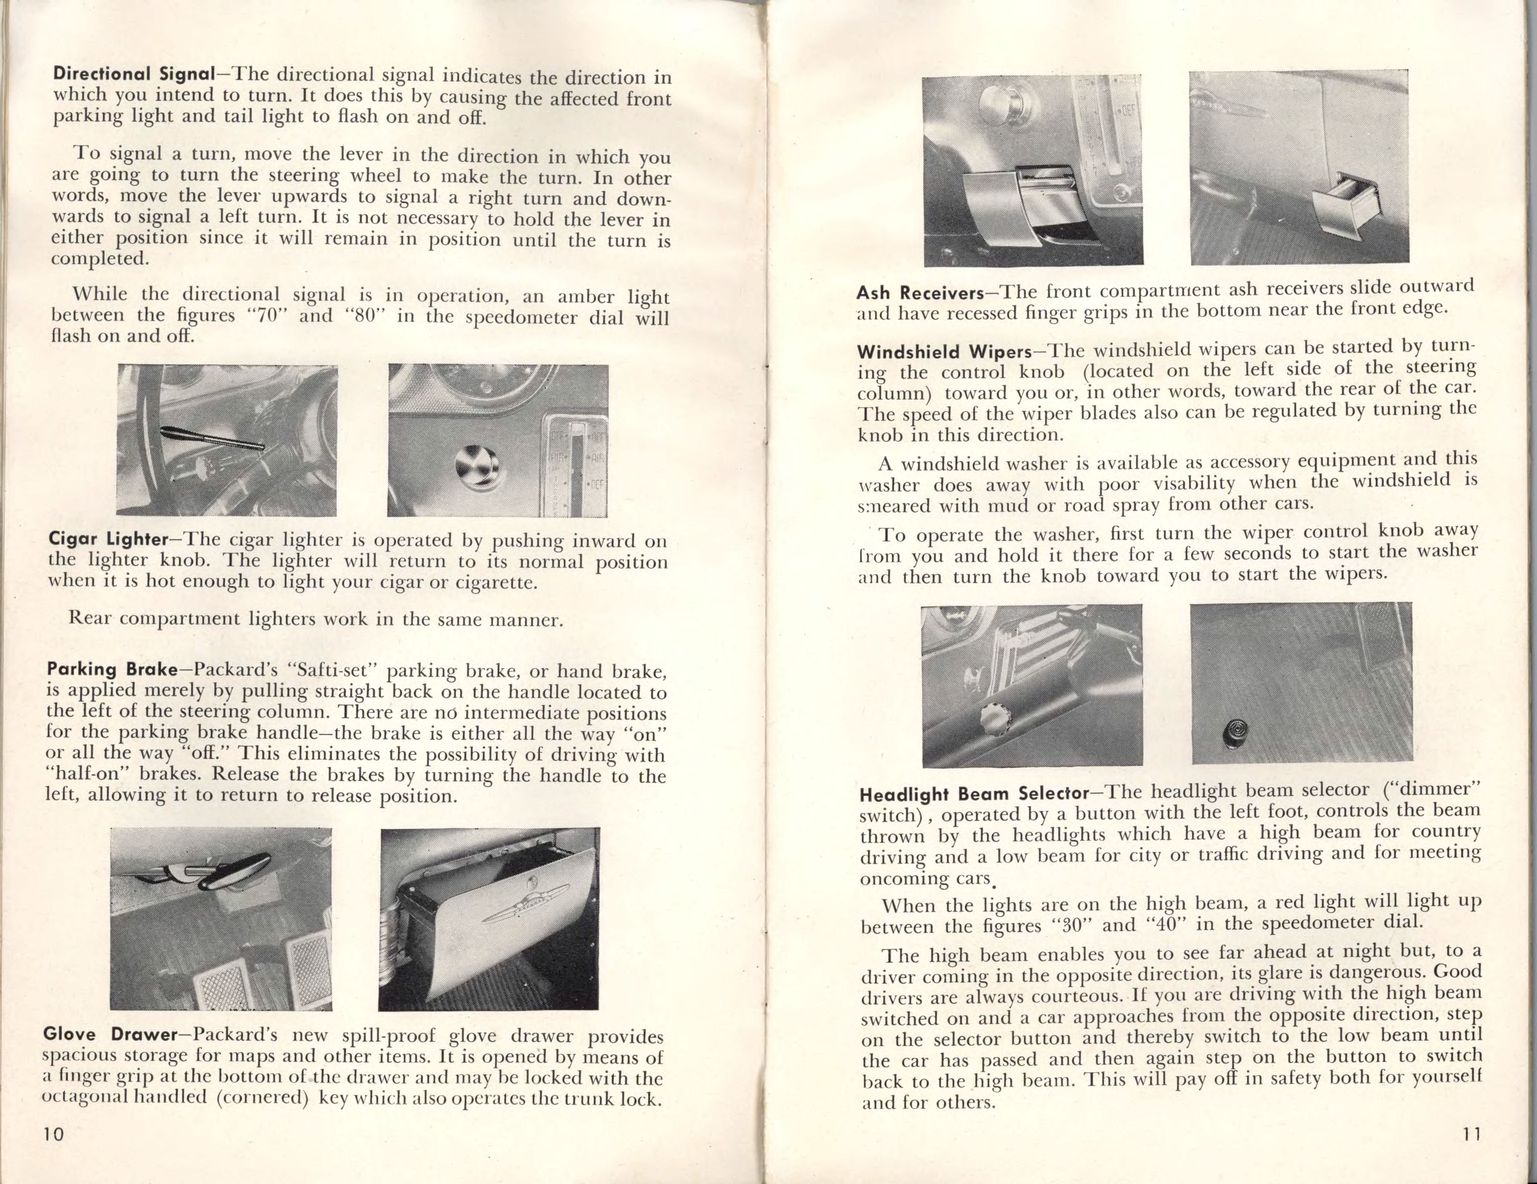 1951_Packard_Manual-10-11